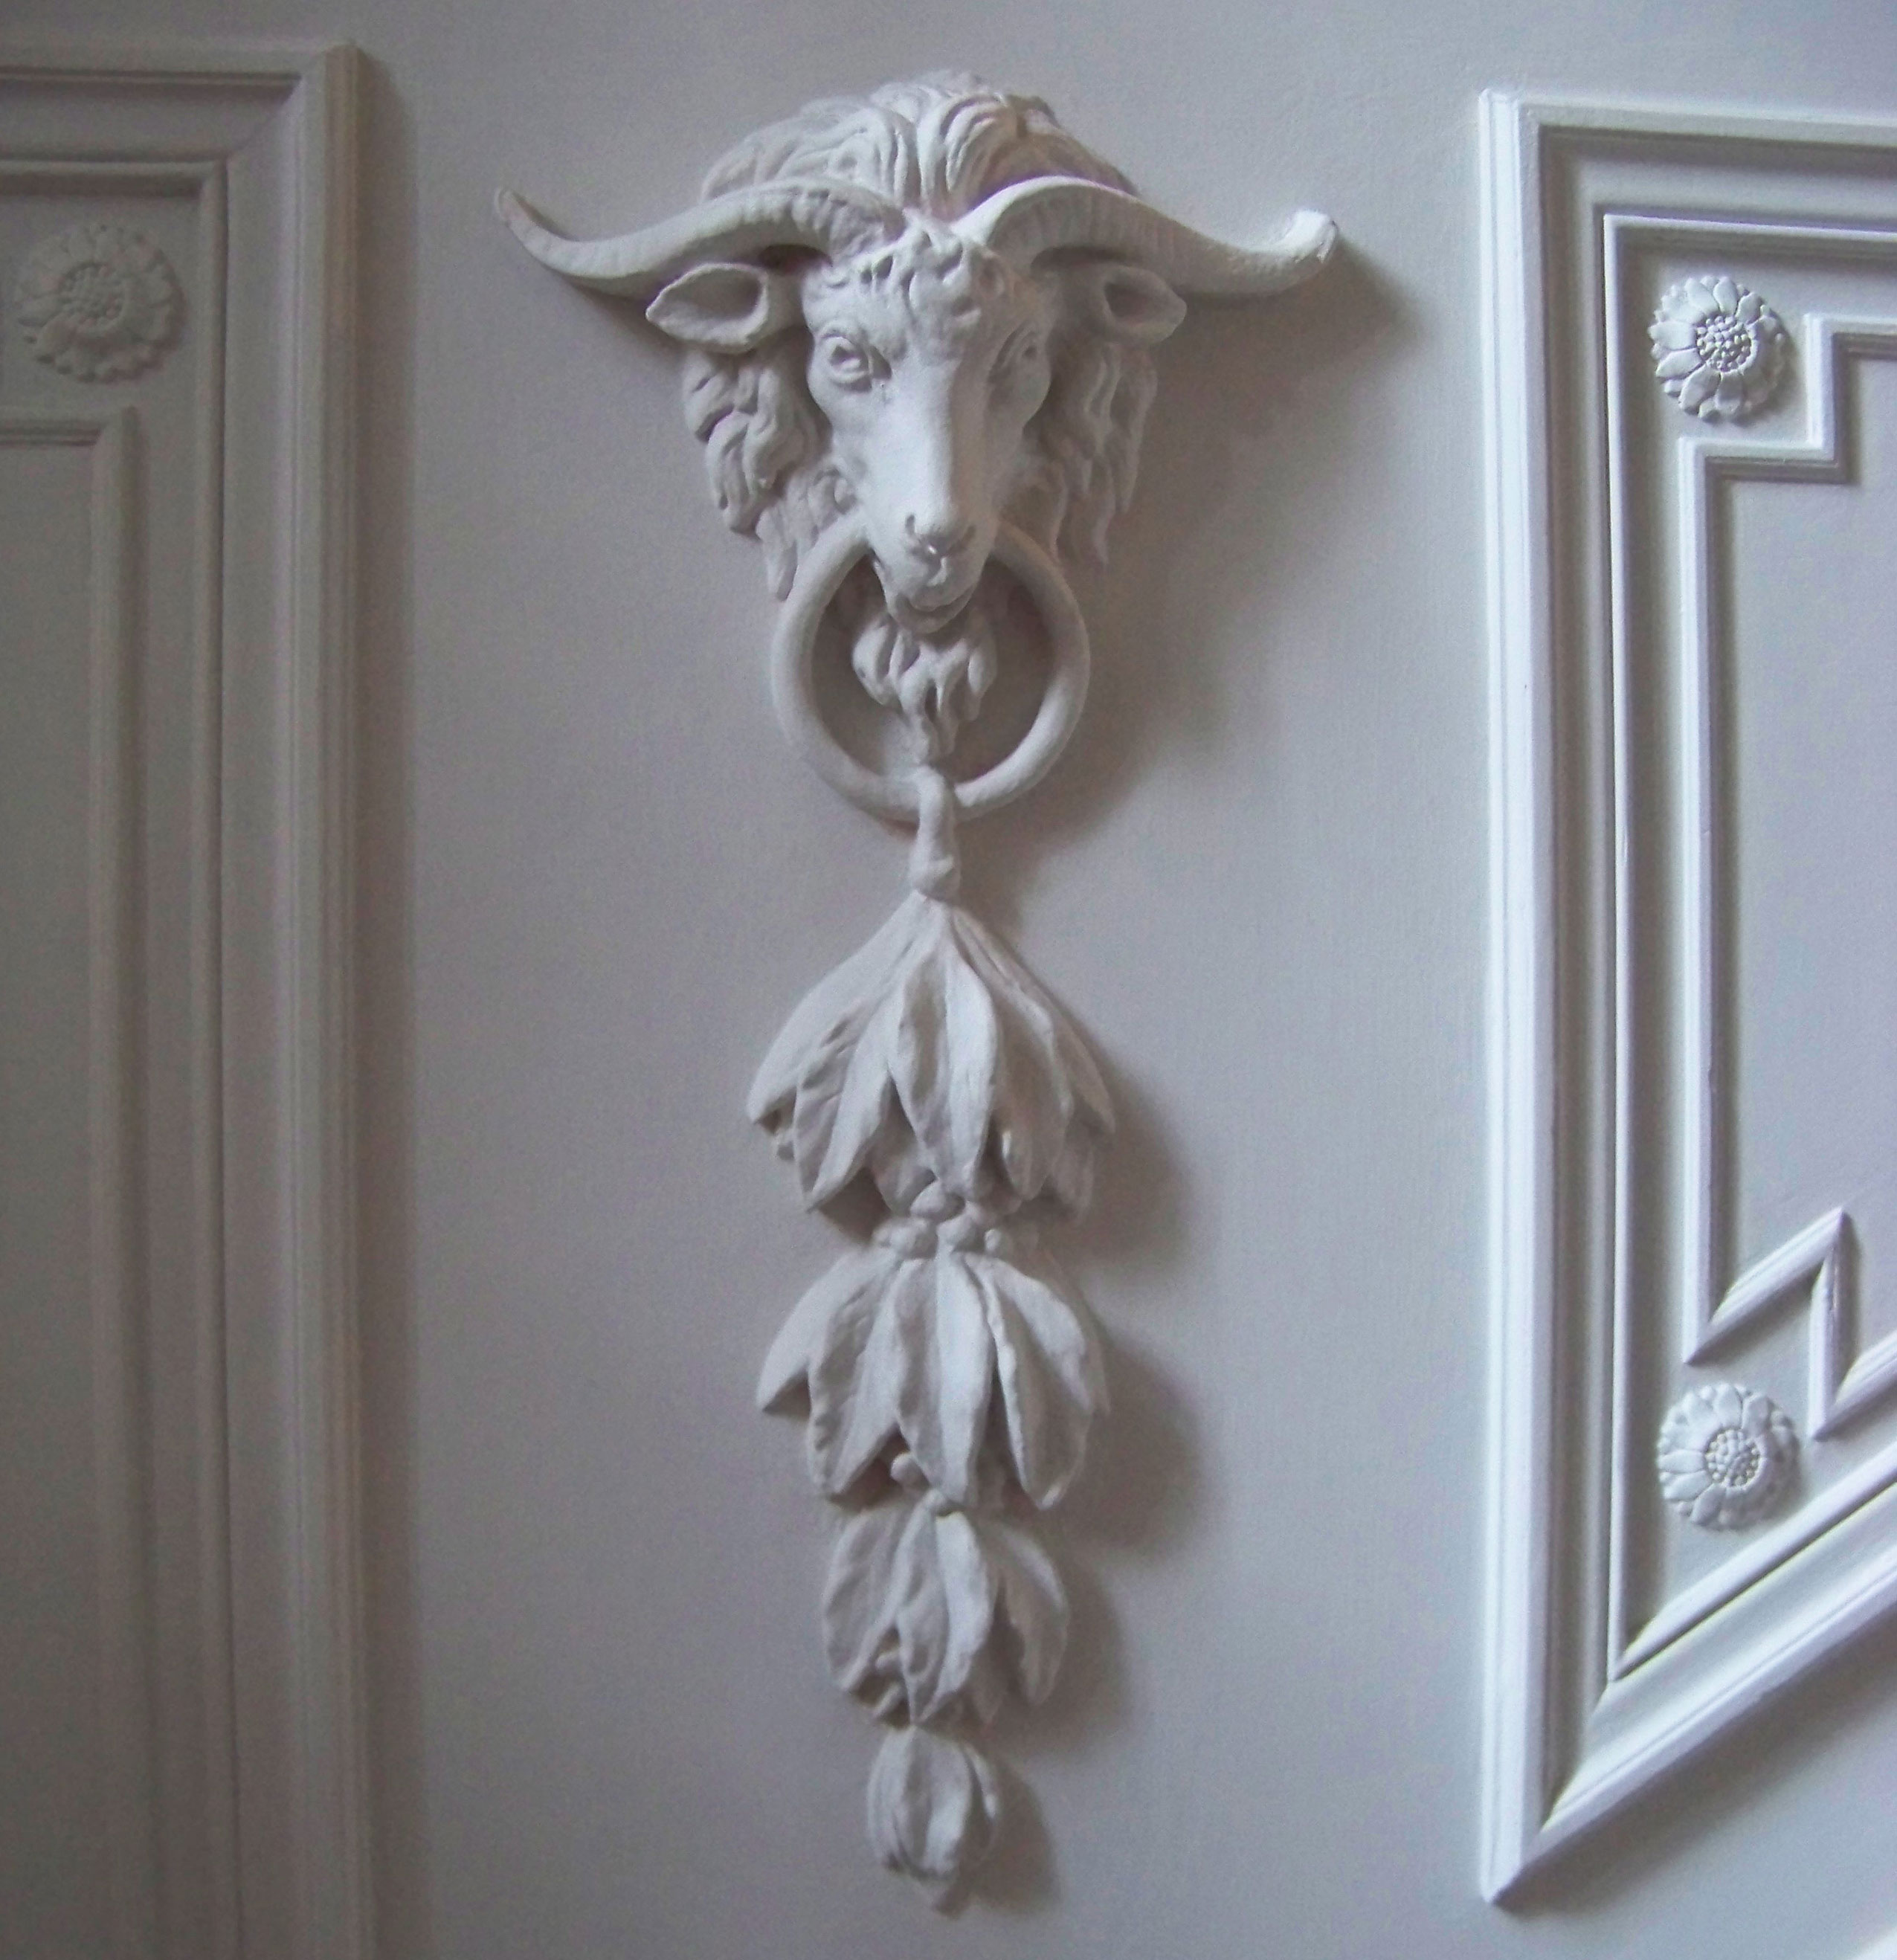 Rams head ornamentation in plaster